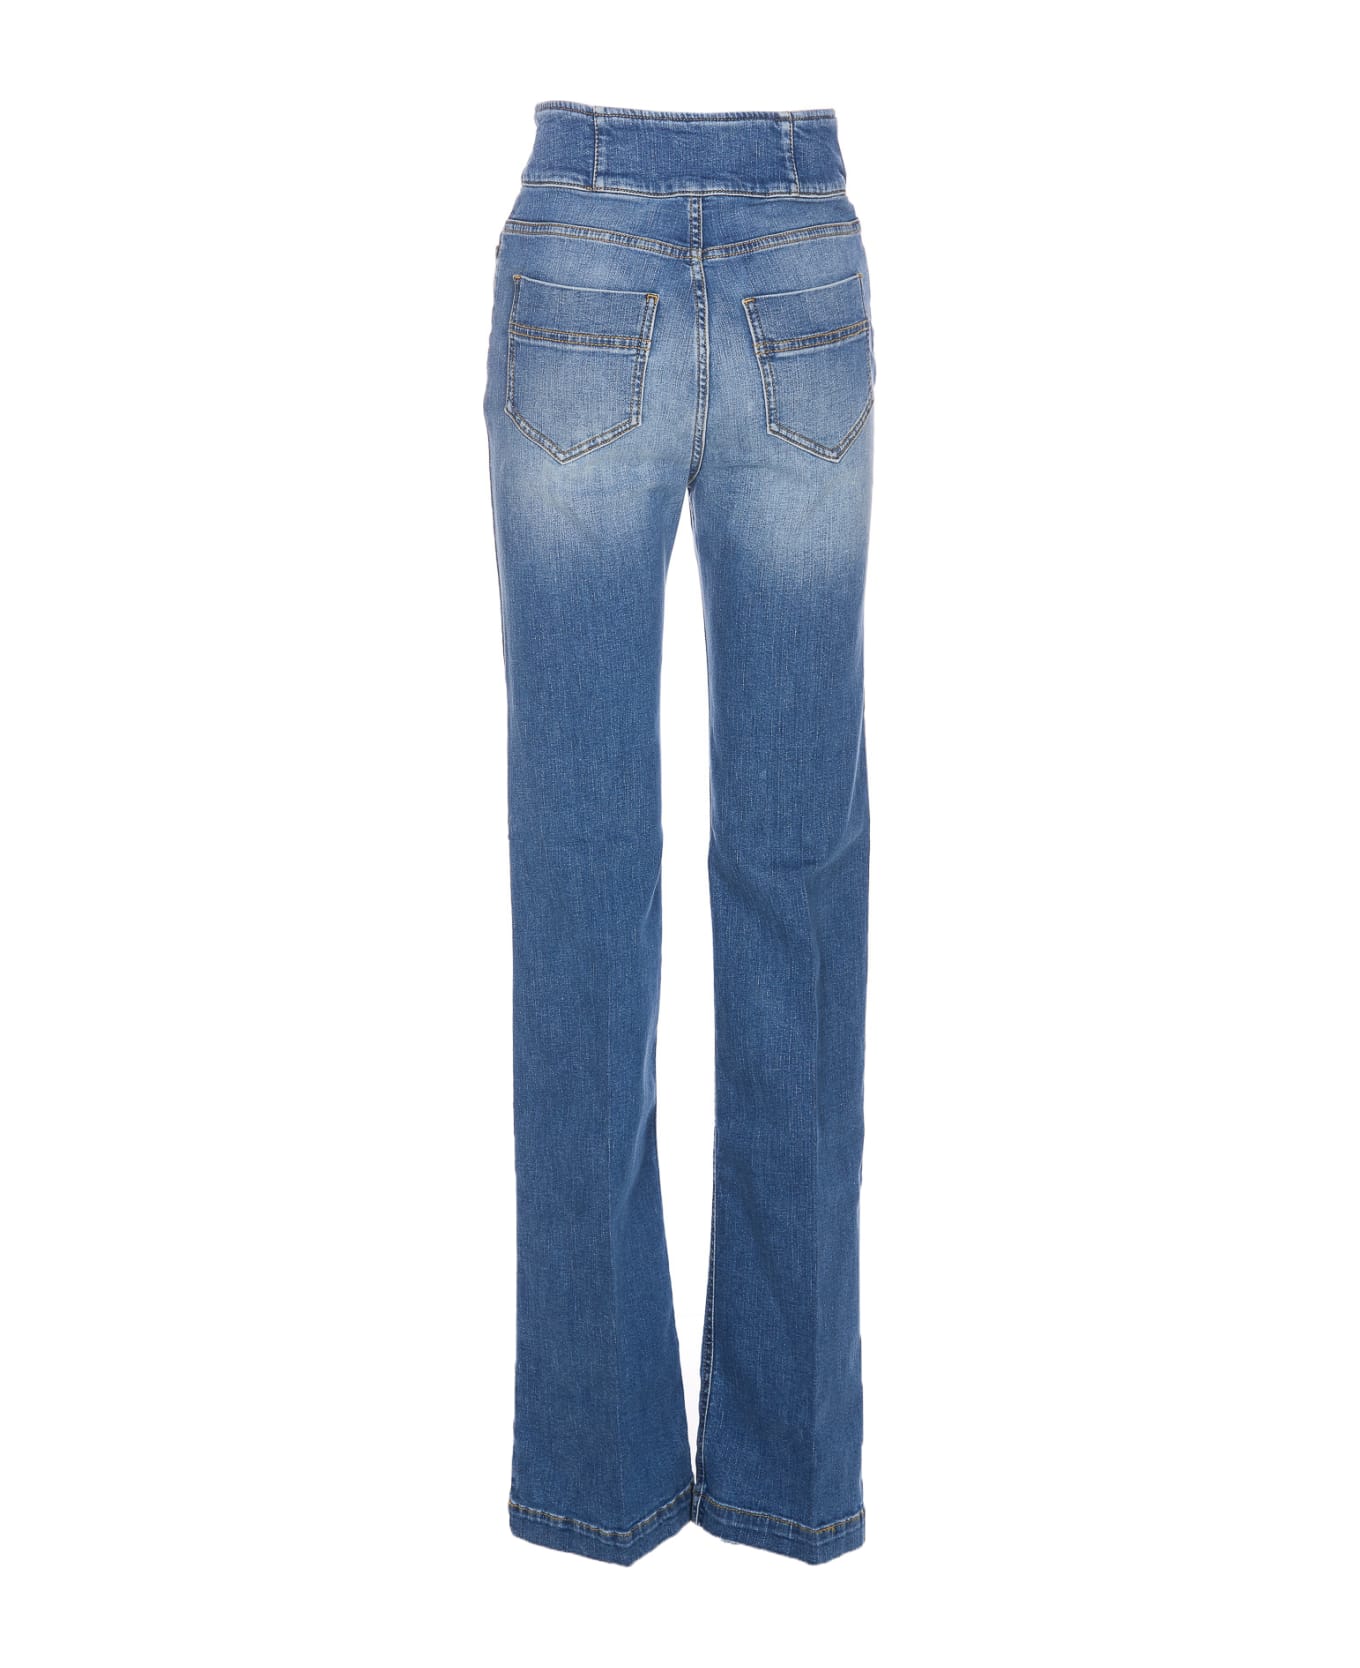 Elisabetta Franchi Jeans - BLUE VINTAGE